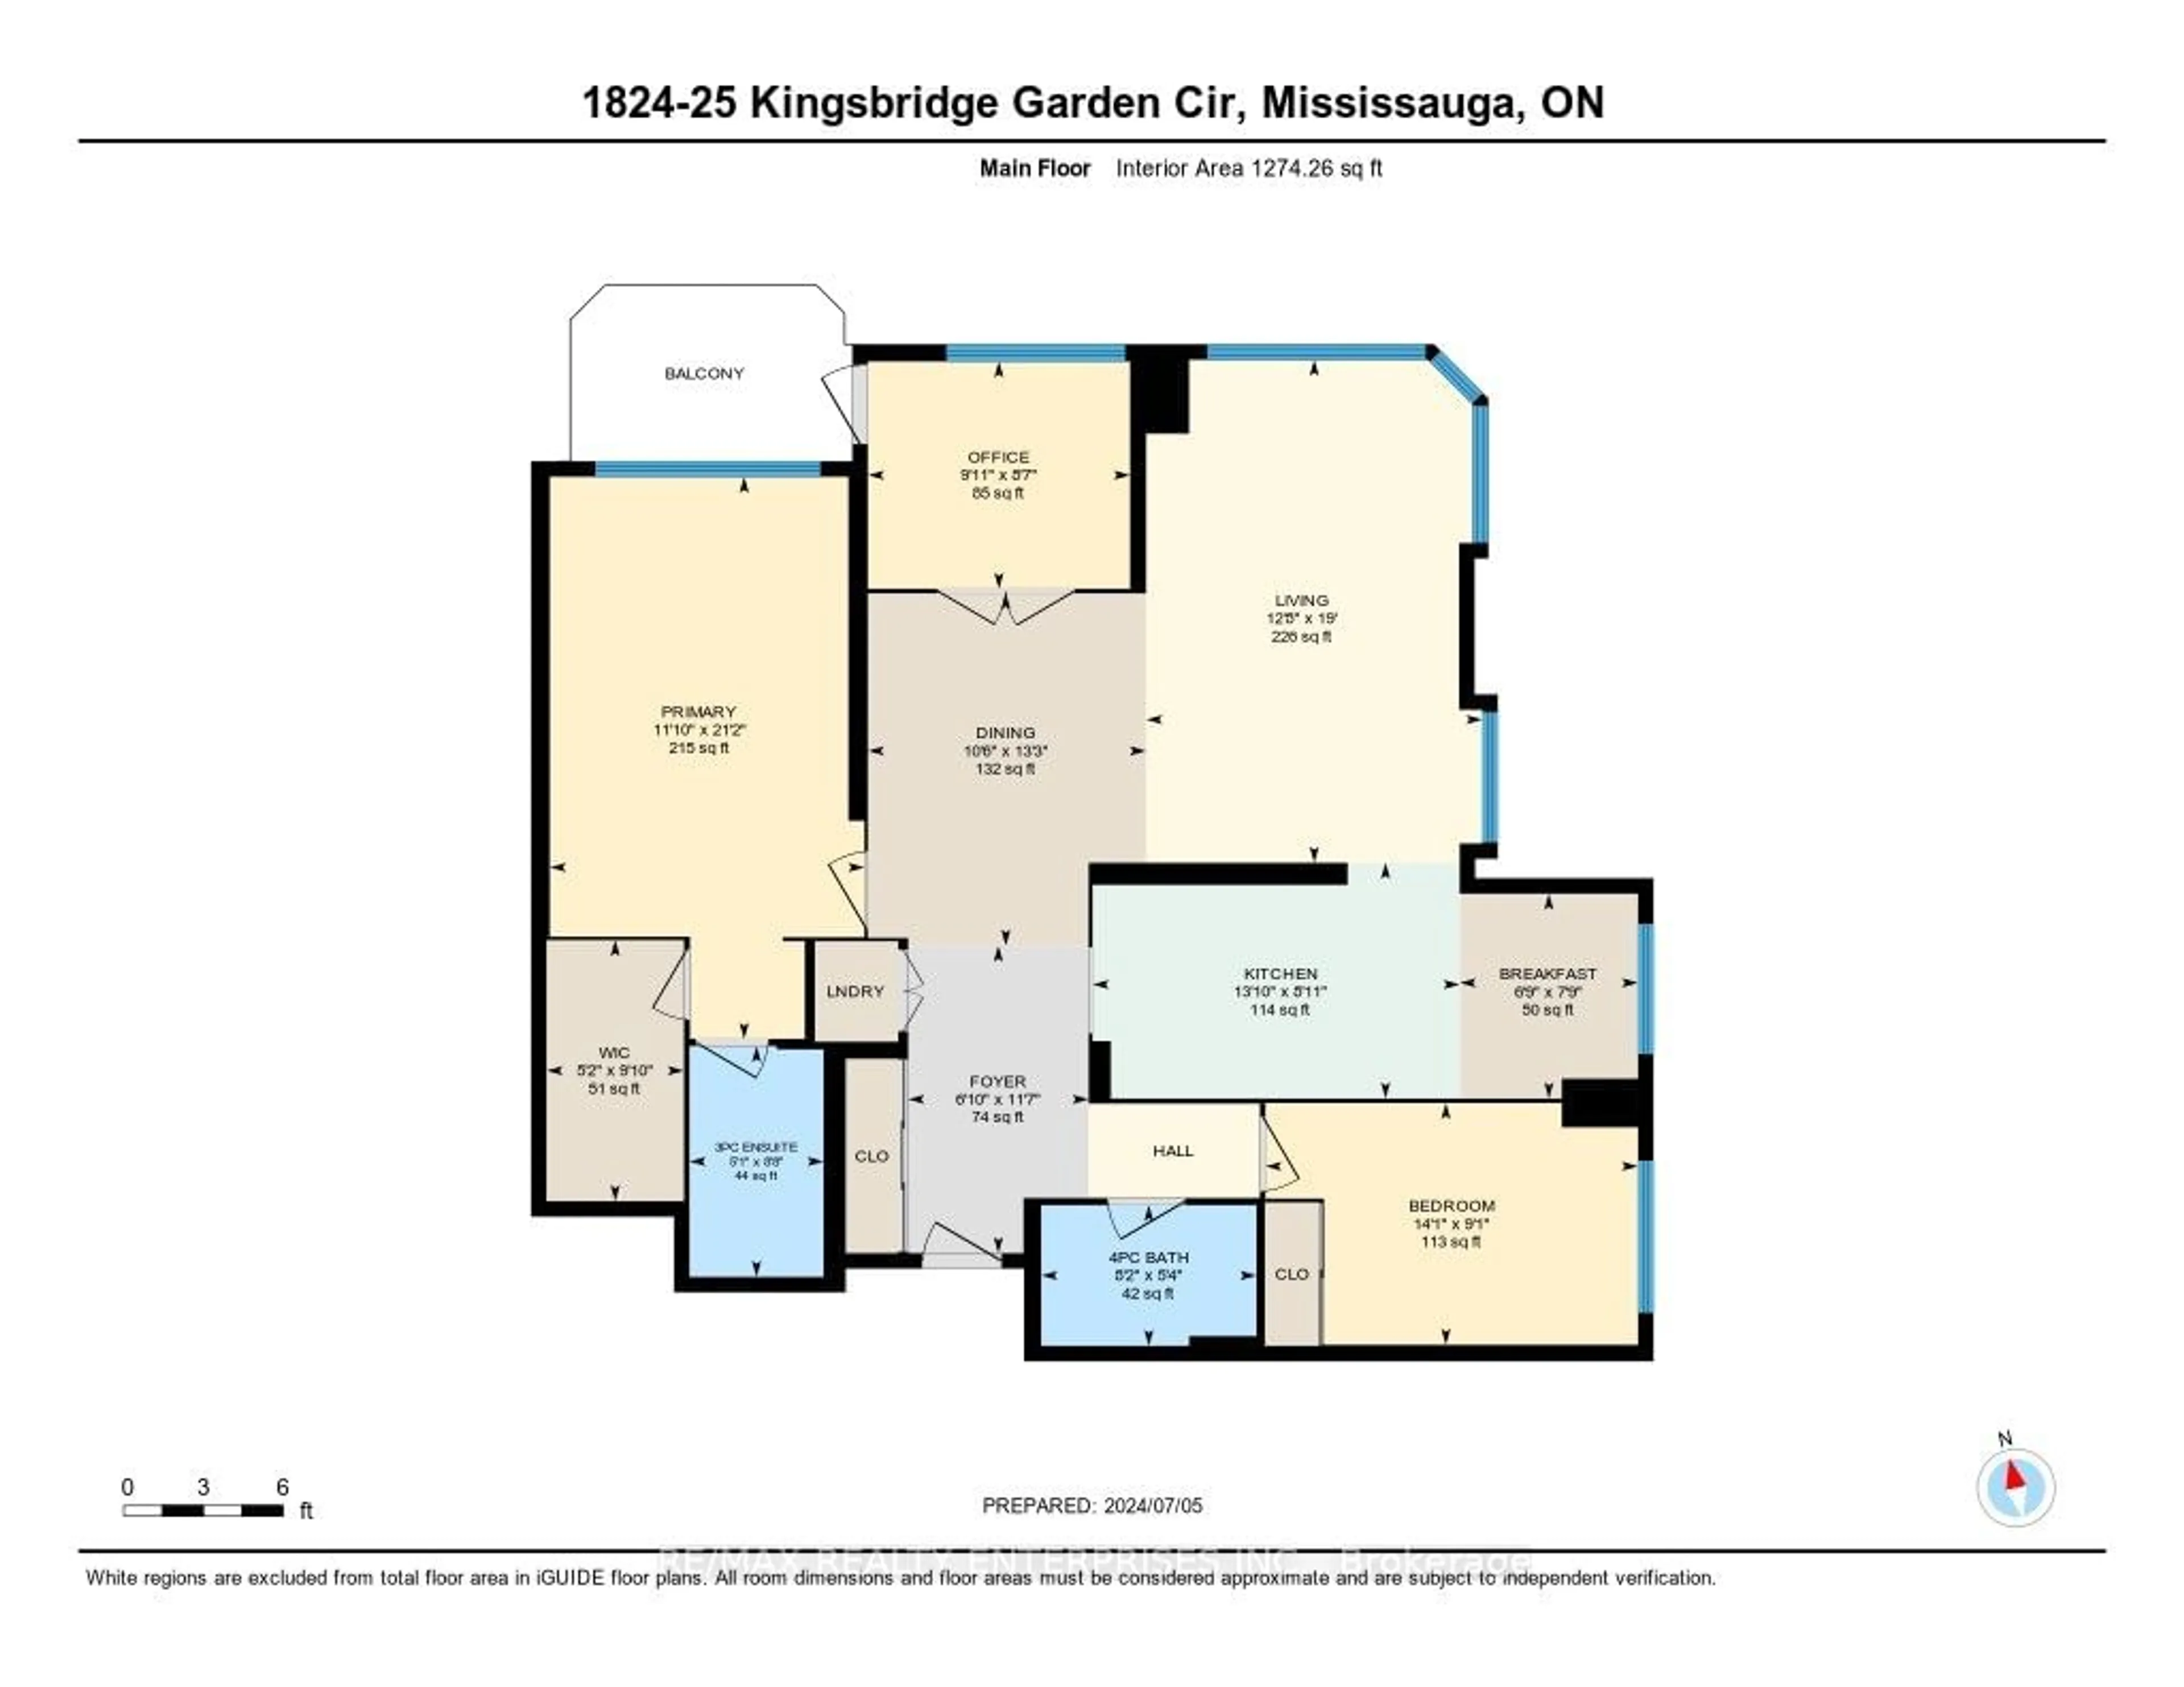 Floor plan for 25 Kingsbridge Garden Circ #1824, Mississauga Ontario L5R 4B1